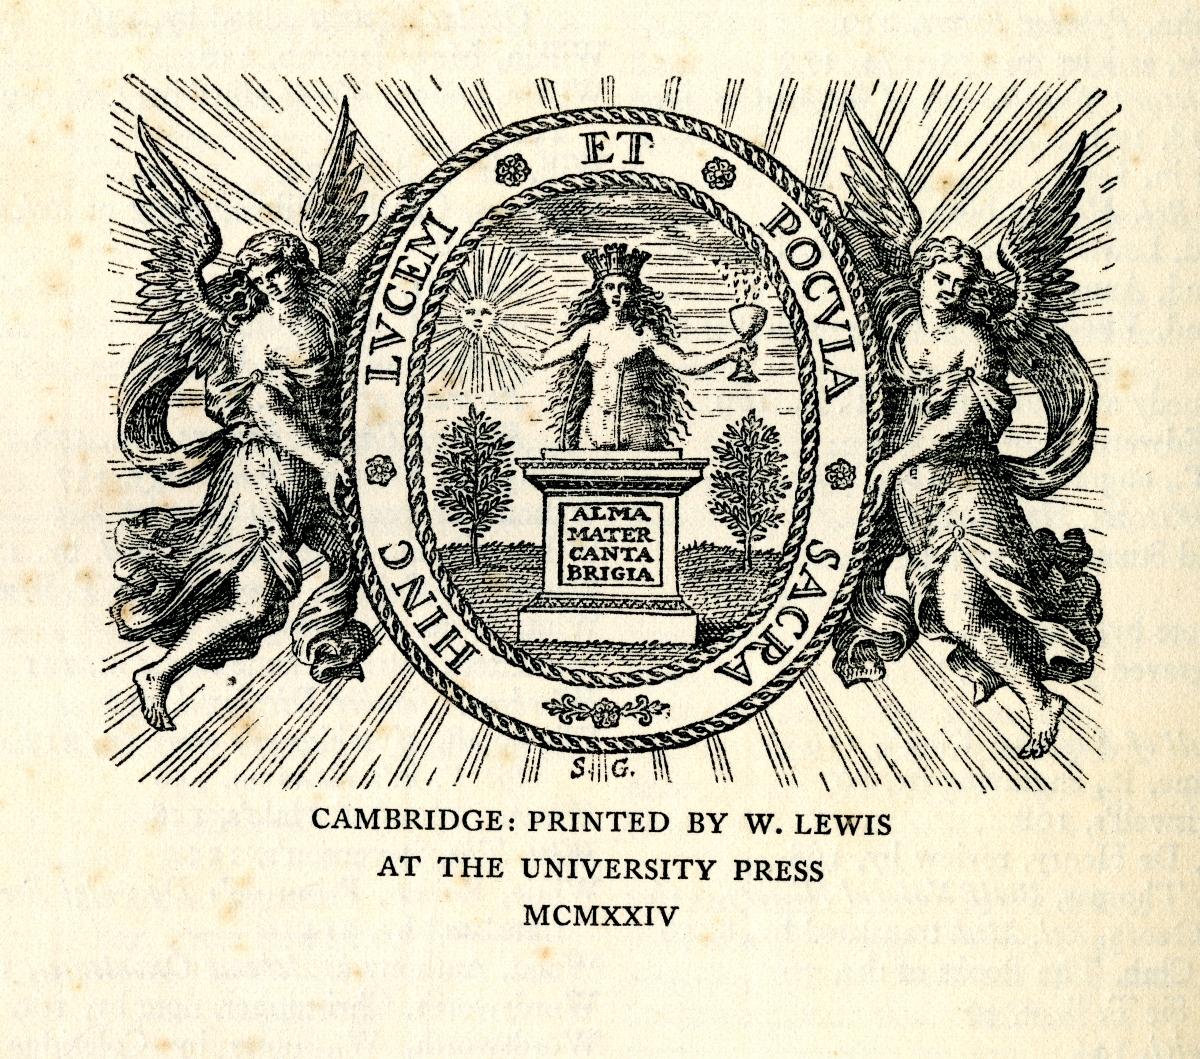 A BIBLIOGRAPHY OF SIR THOMAS BROWNE printers mark